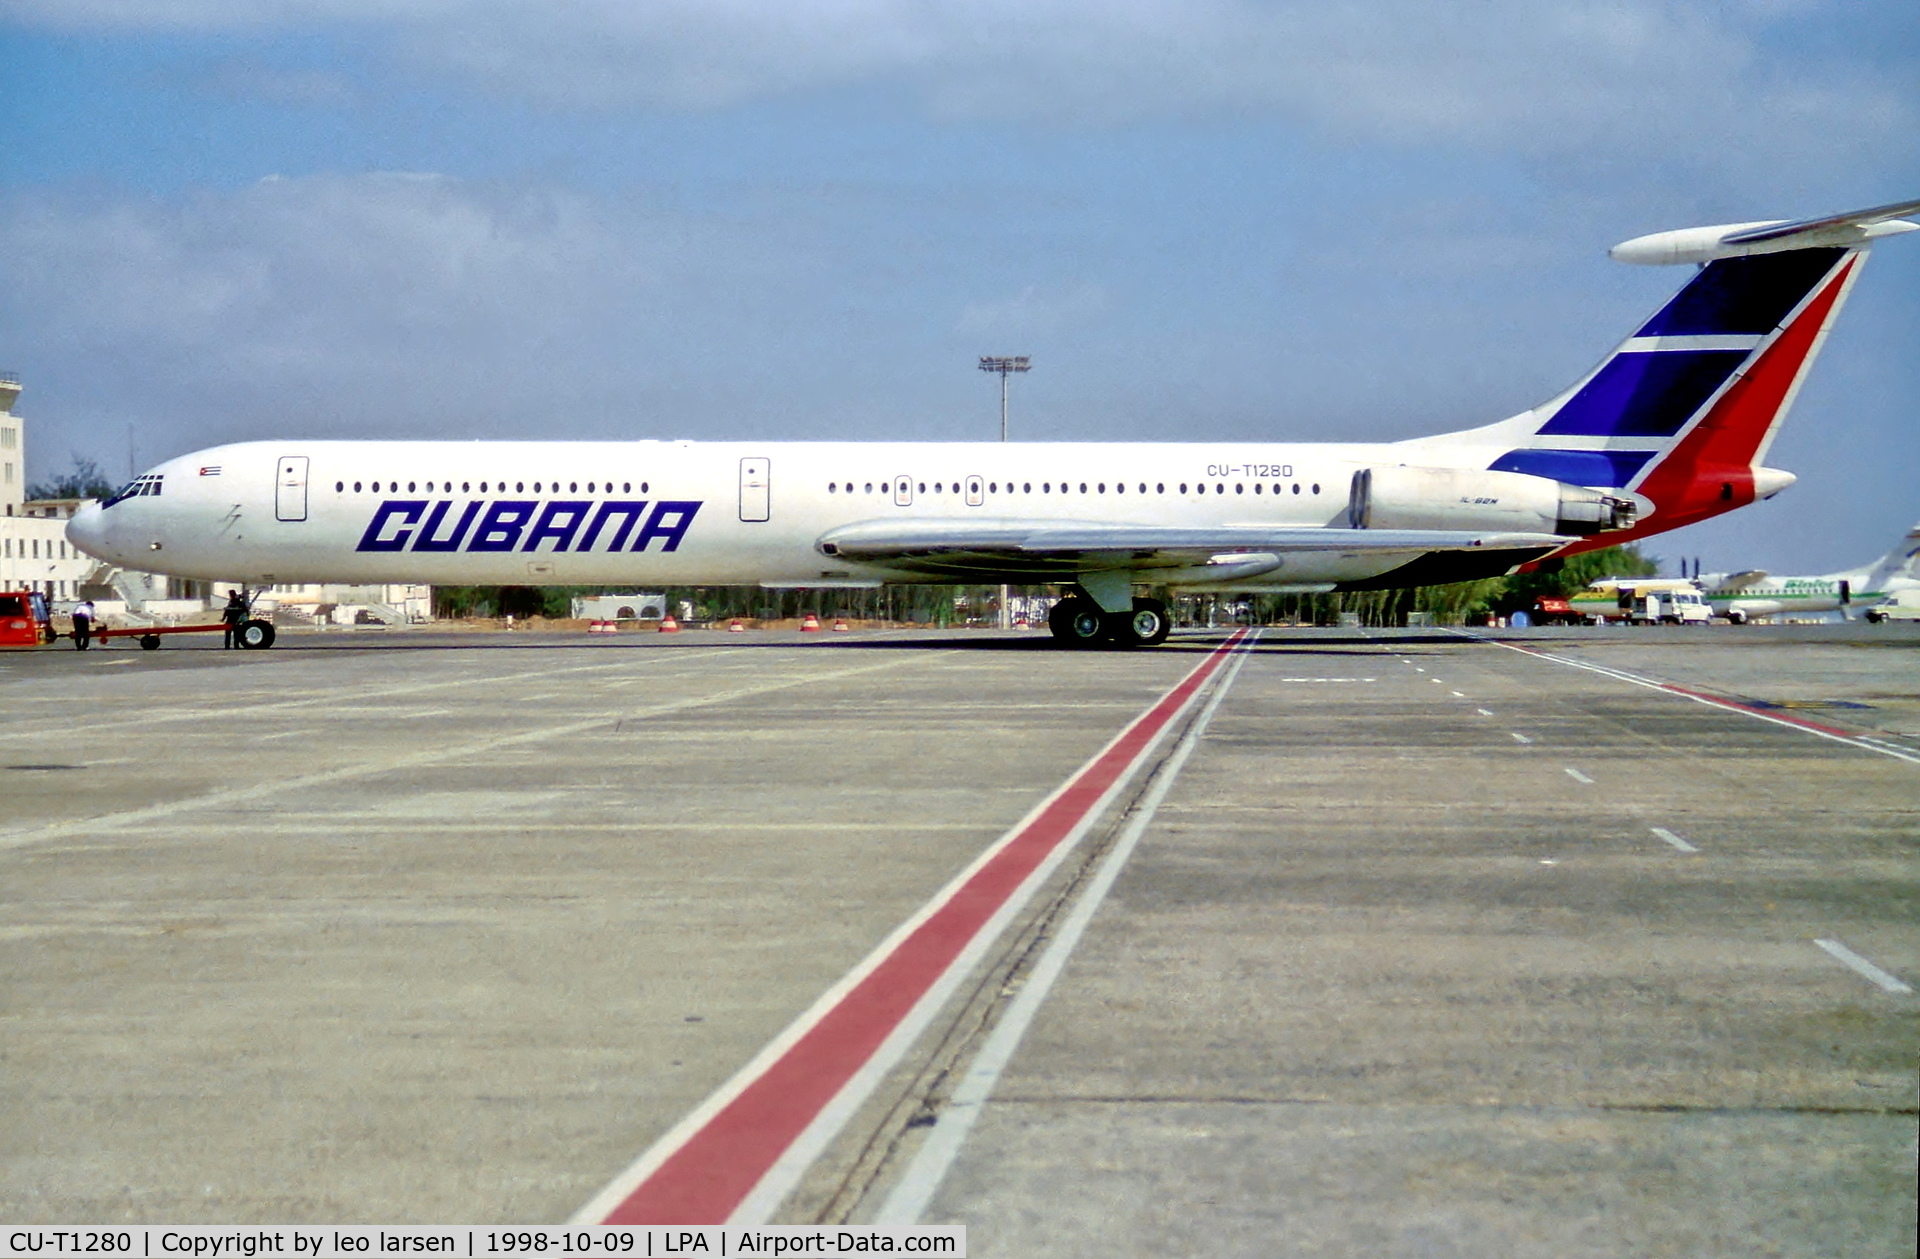 CU-T1280, 1987 Ilyushin Il-62M C/N 3749648, Las Palmas 9.10.98